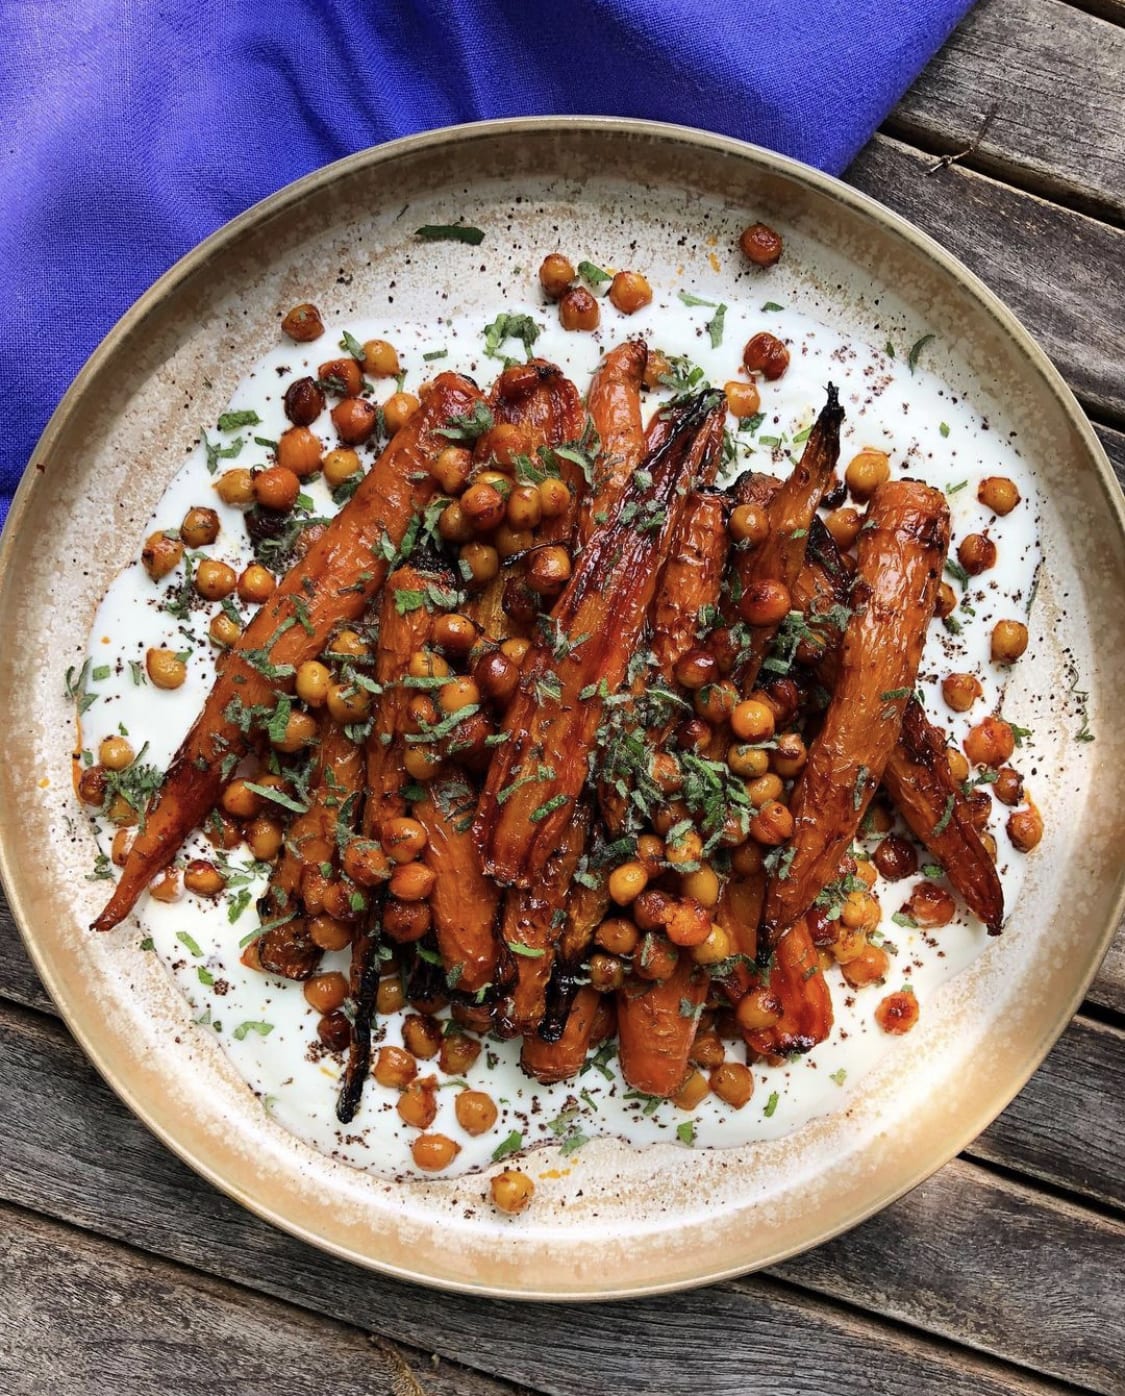 bean-recipe-honey-roasted-carrots-with-harissa-chickpeas-on-sumac-yoghurt-boldbeanco